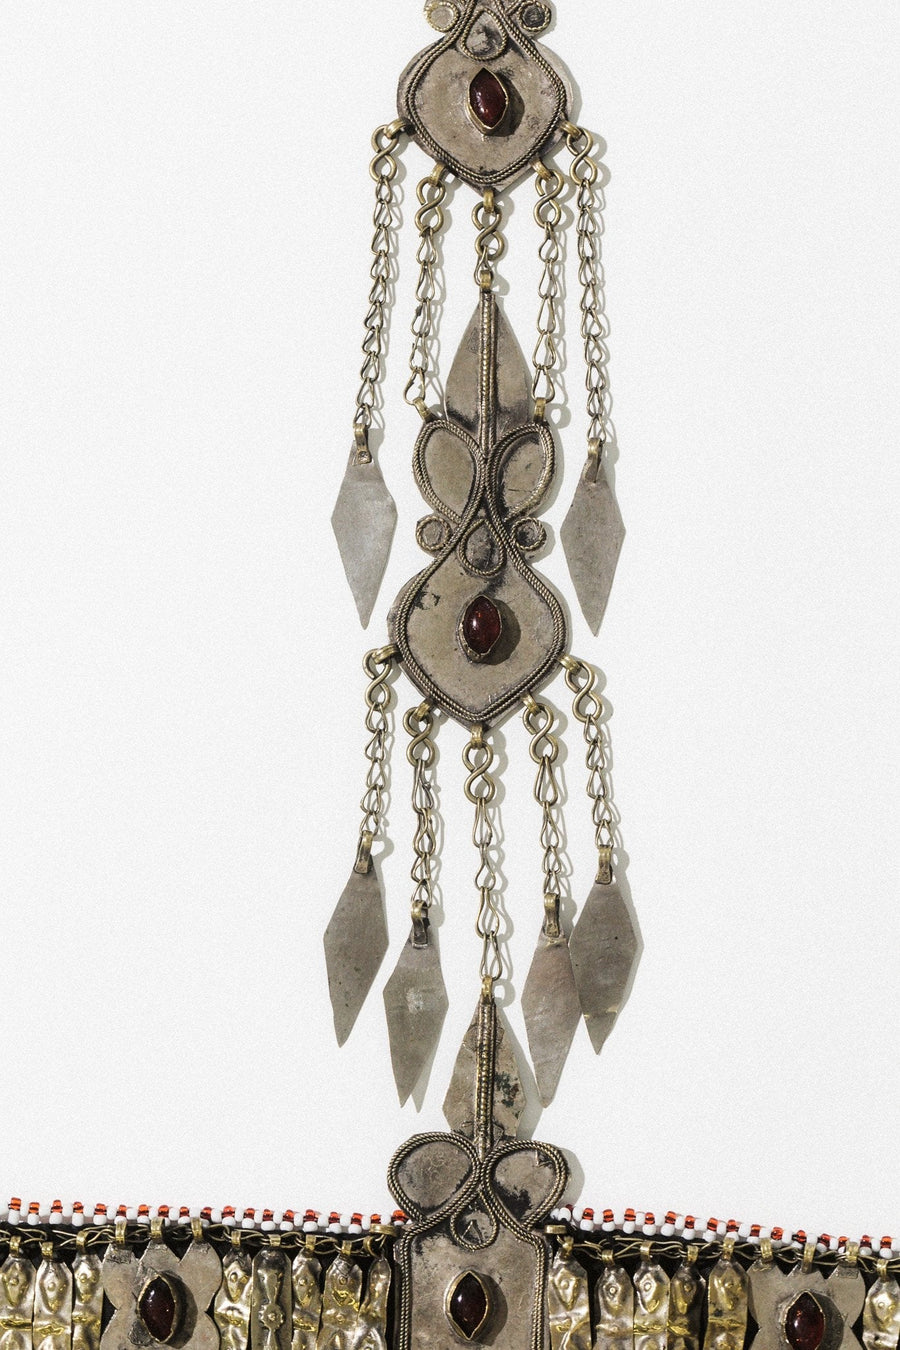 Child of Wild Jewelry Brass Turkomen Body Chain Necklace